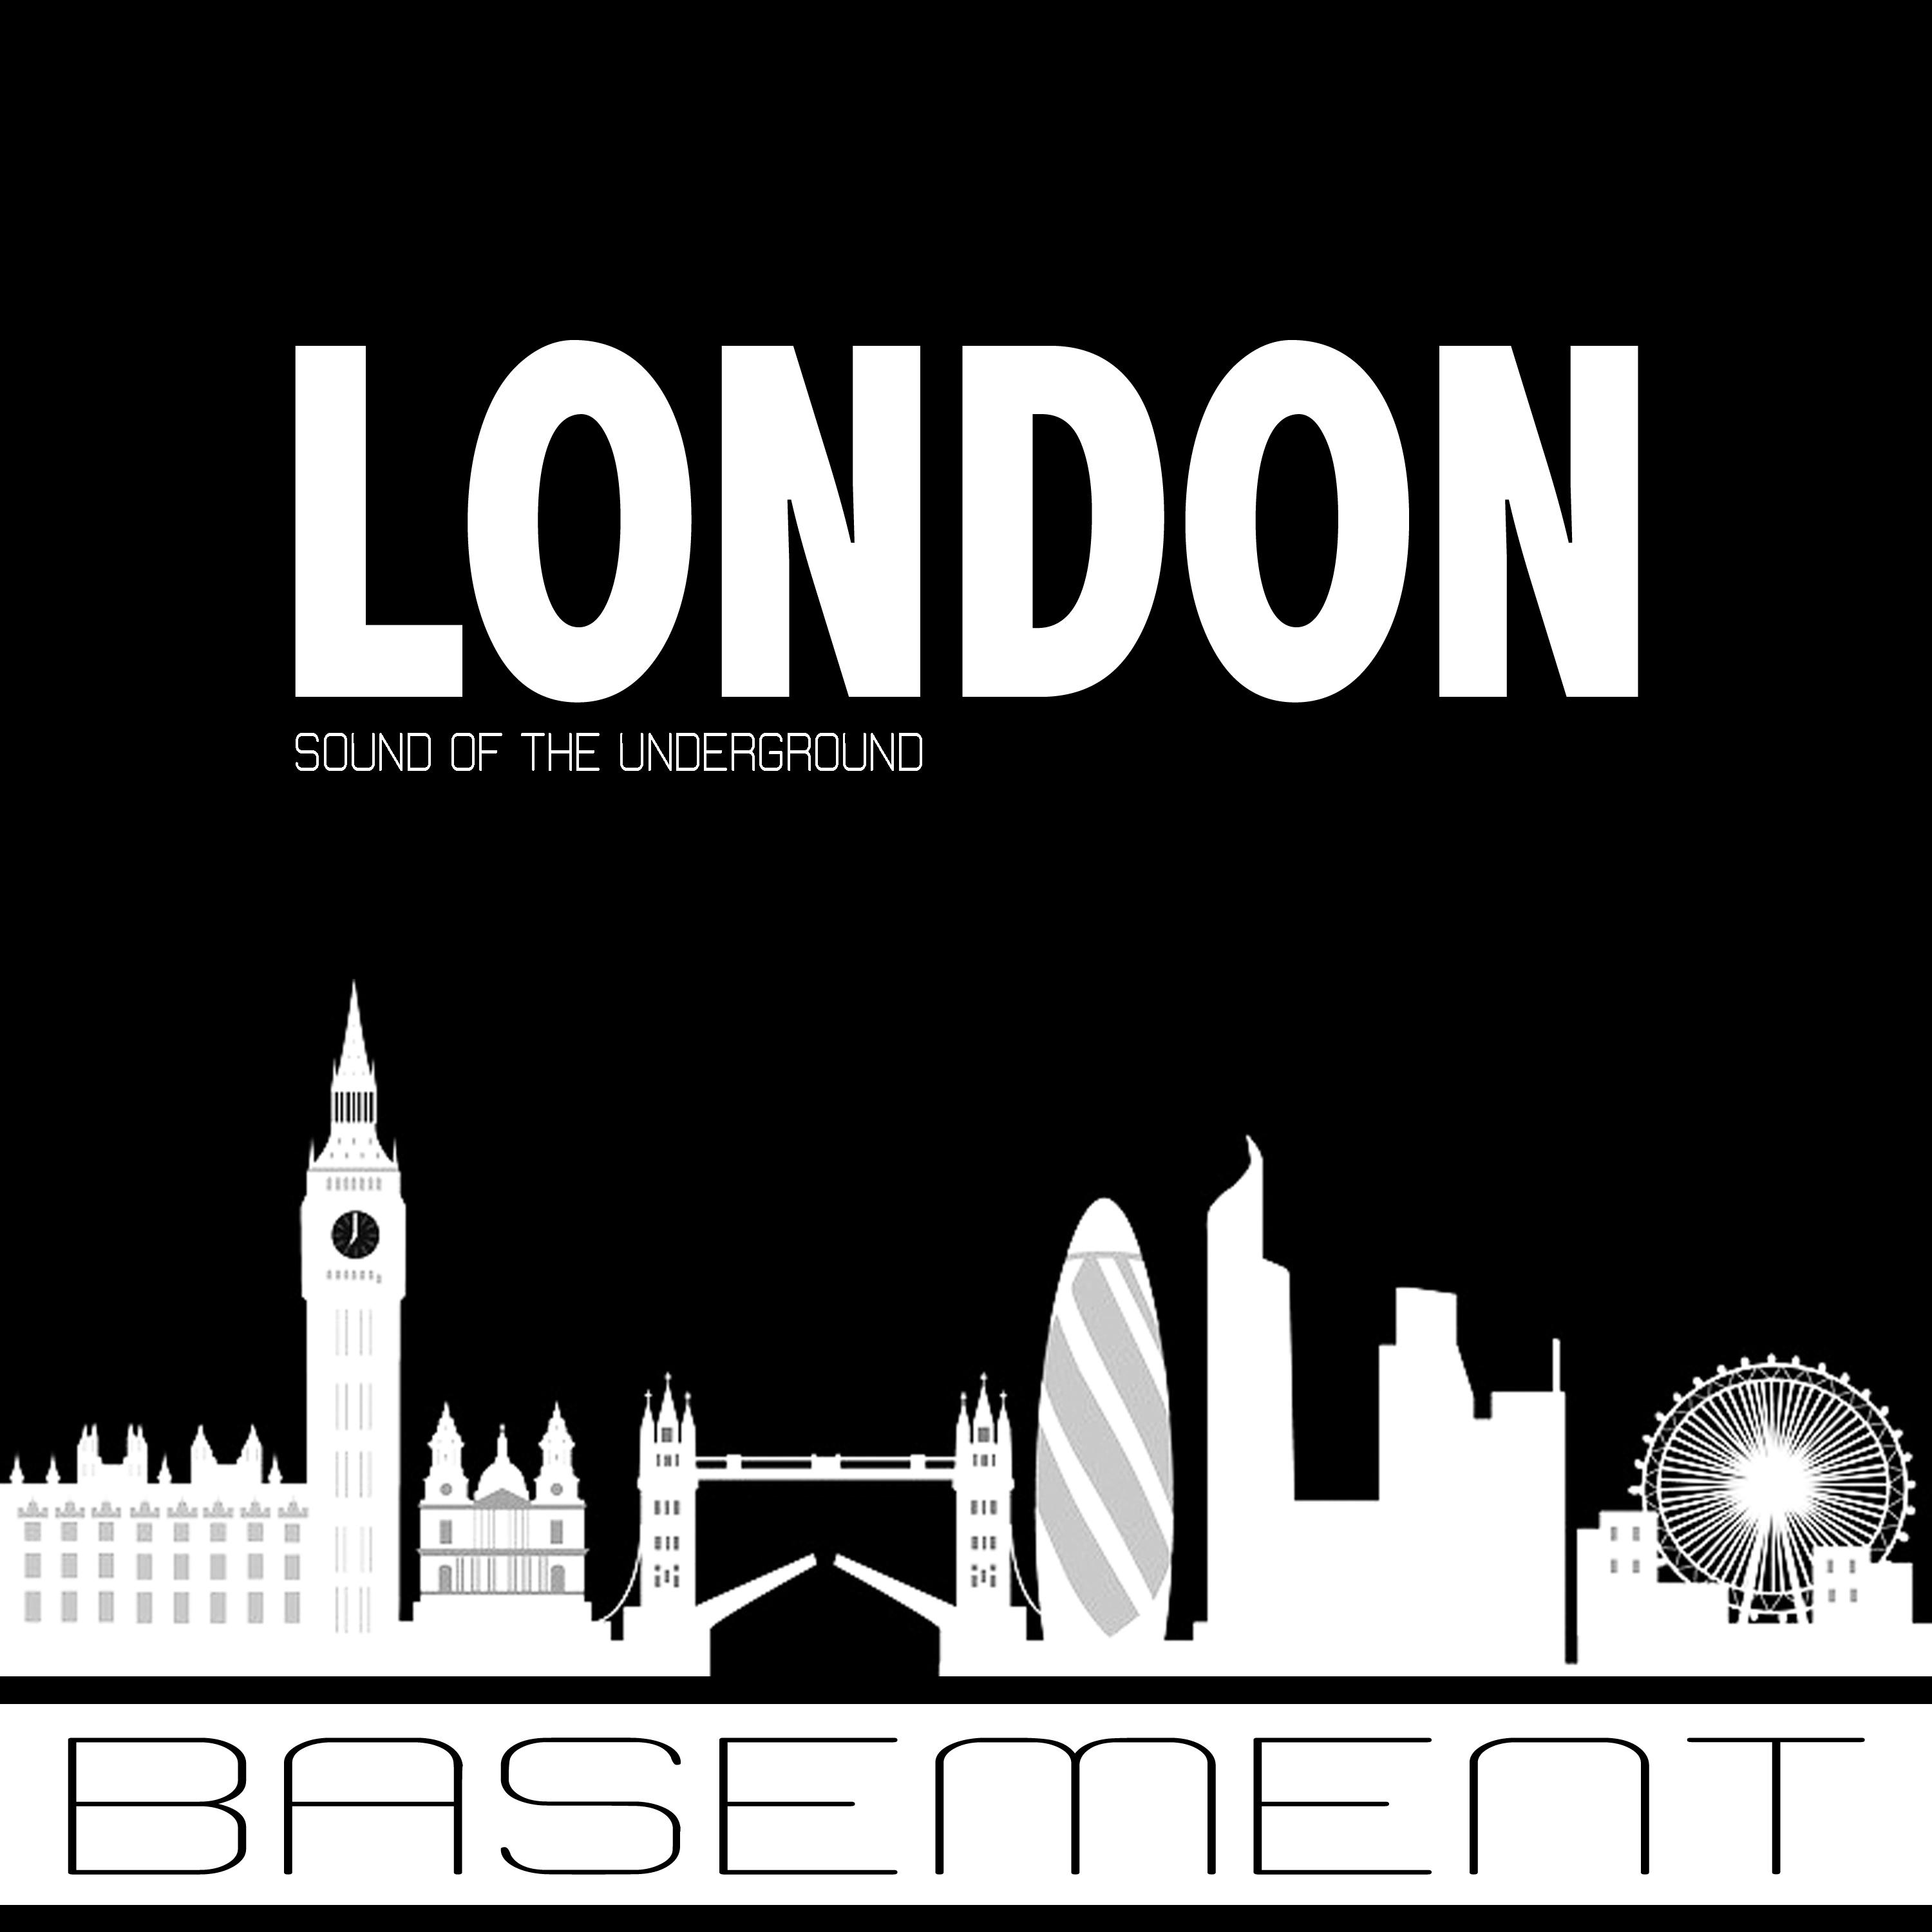 Basement Sound of the Underground London